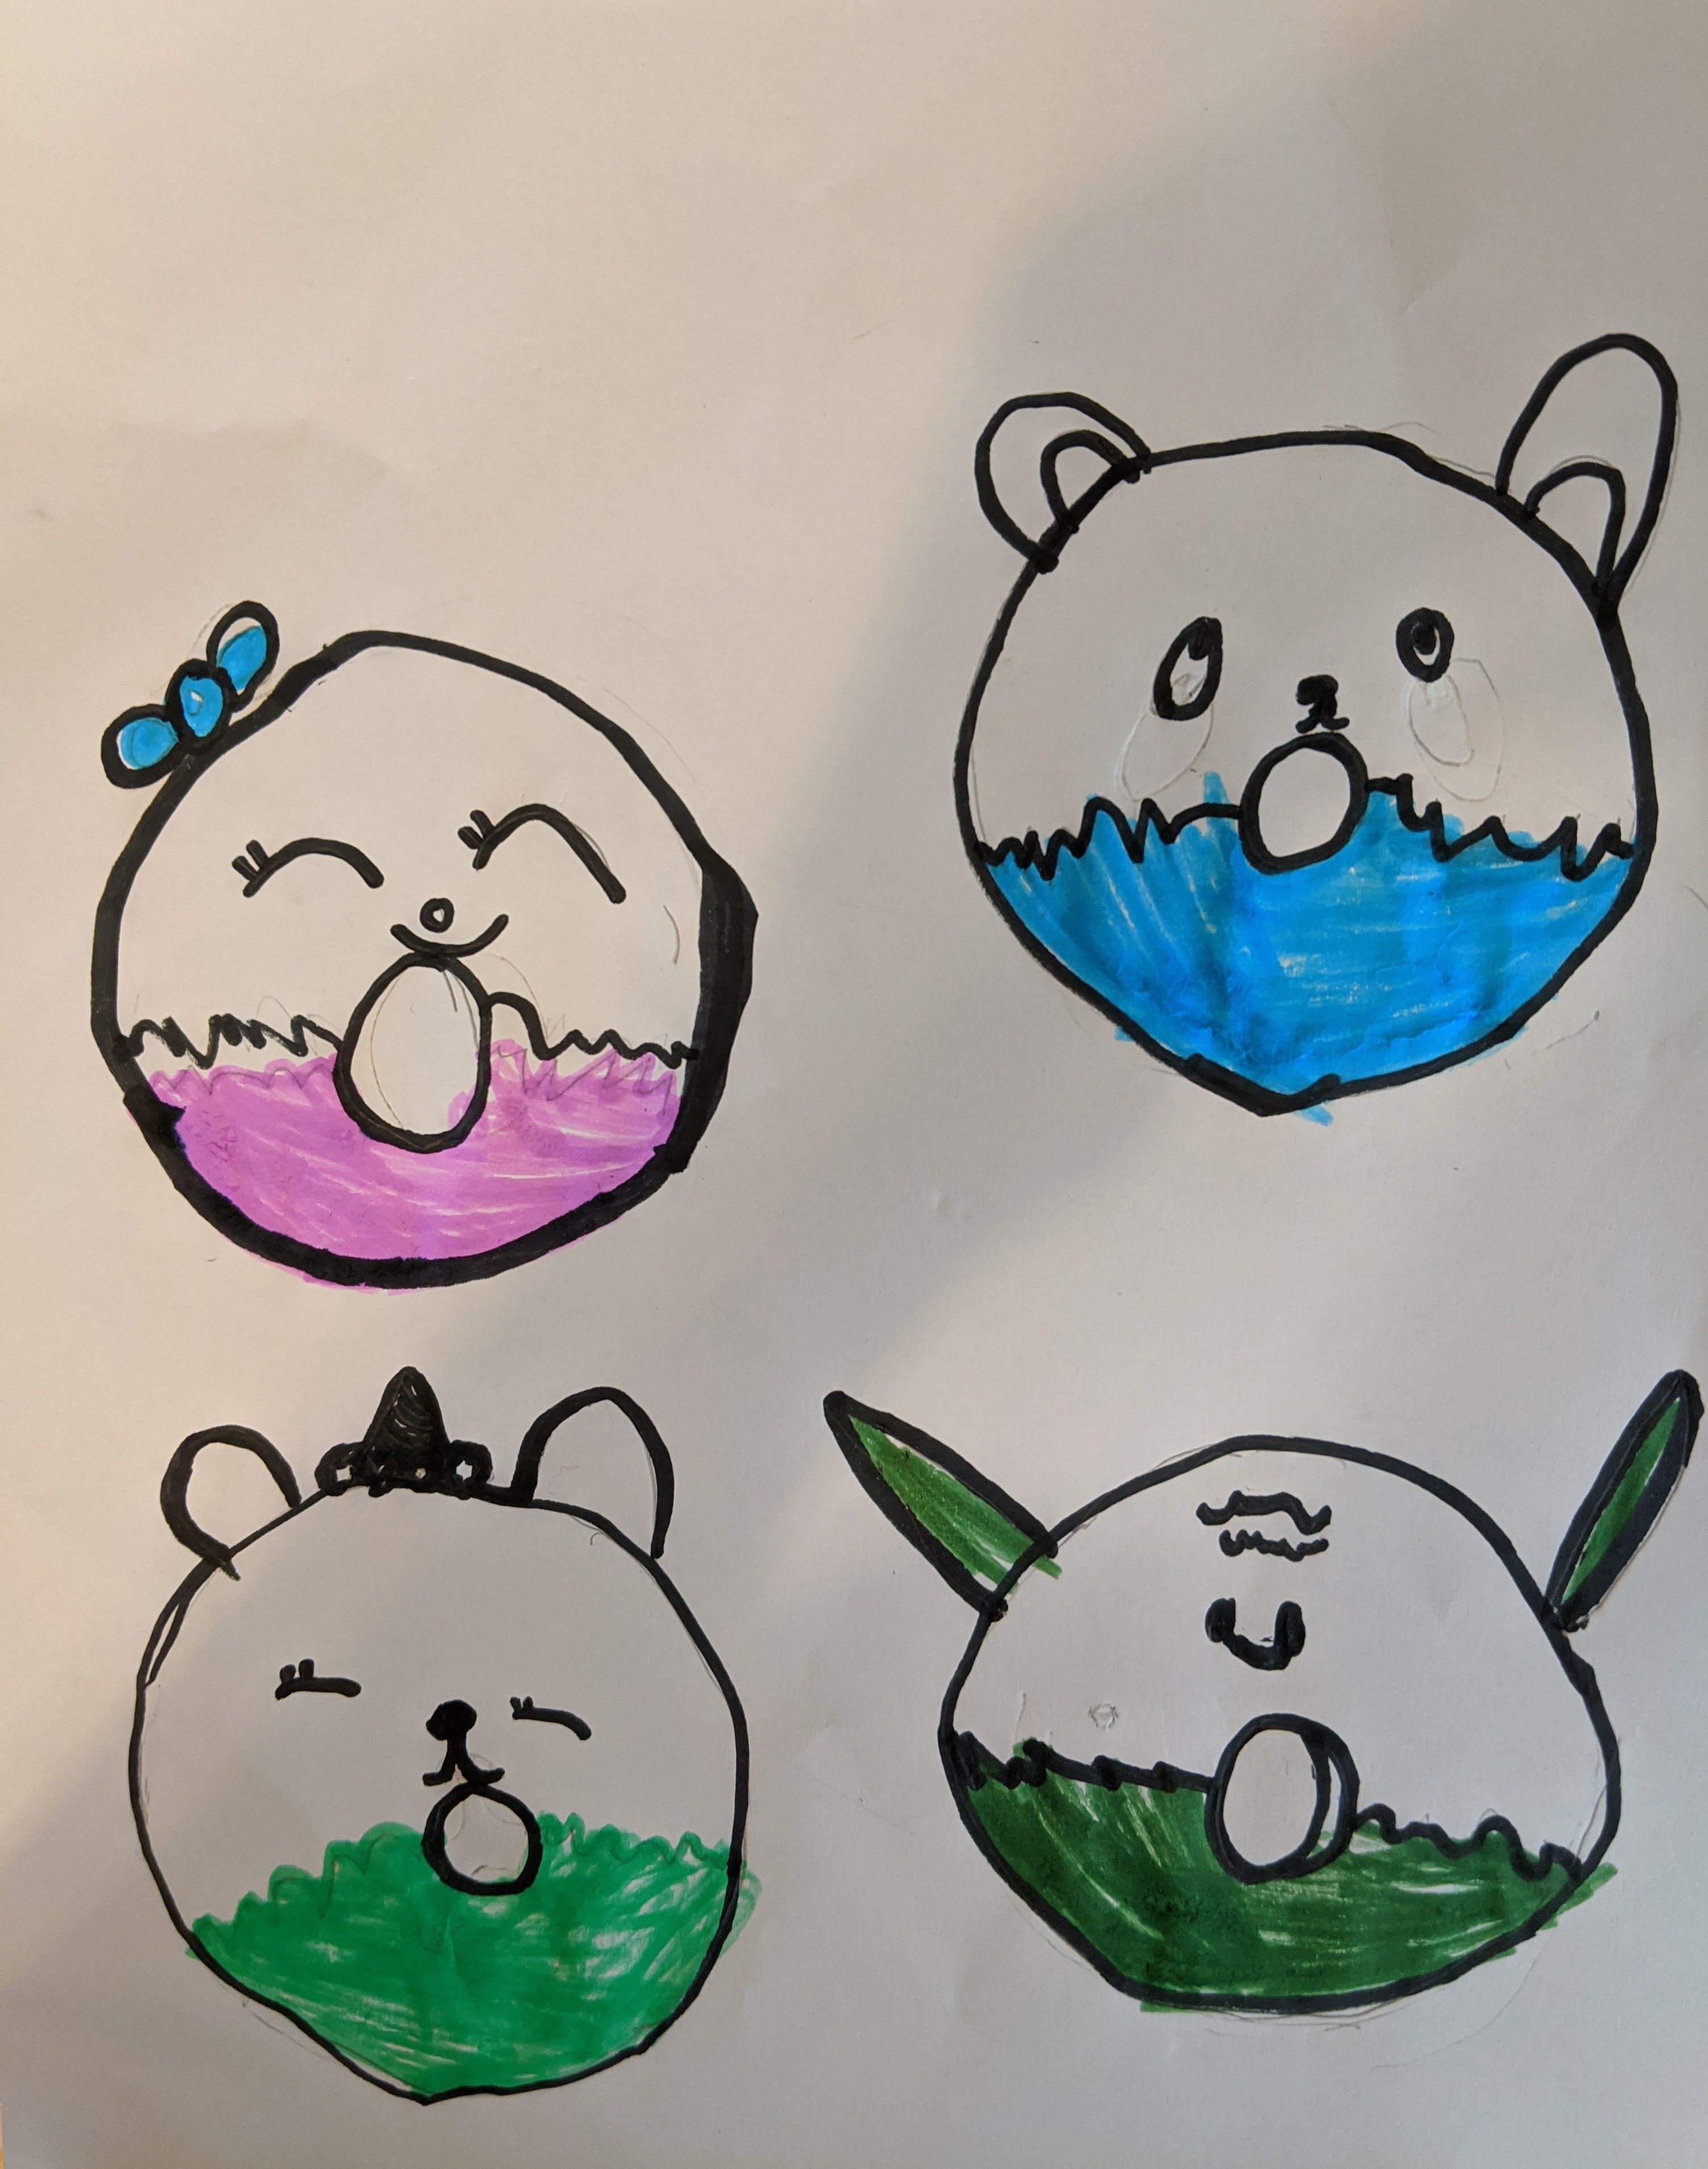 Learn How to Draw Panda, Yoda, & Cute Kawaii Donuts and Tell Funny